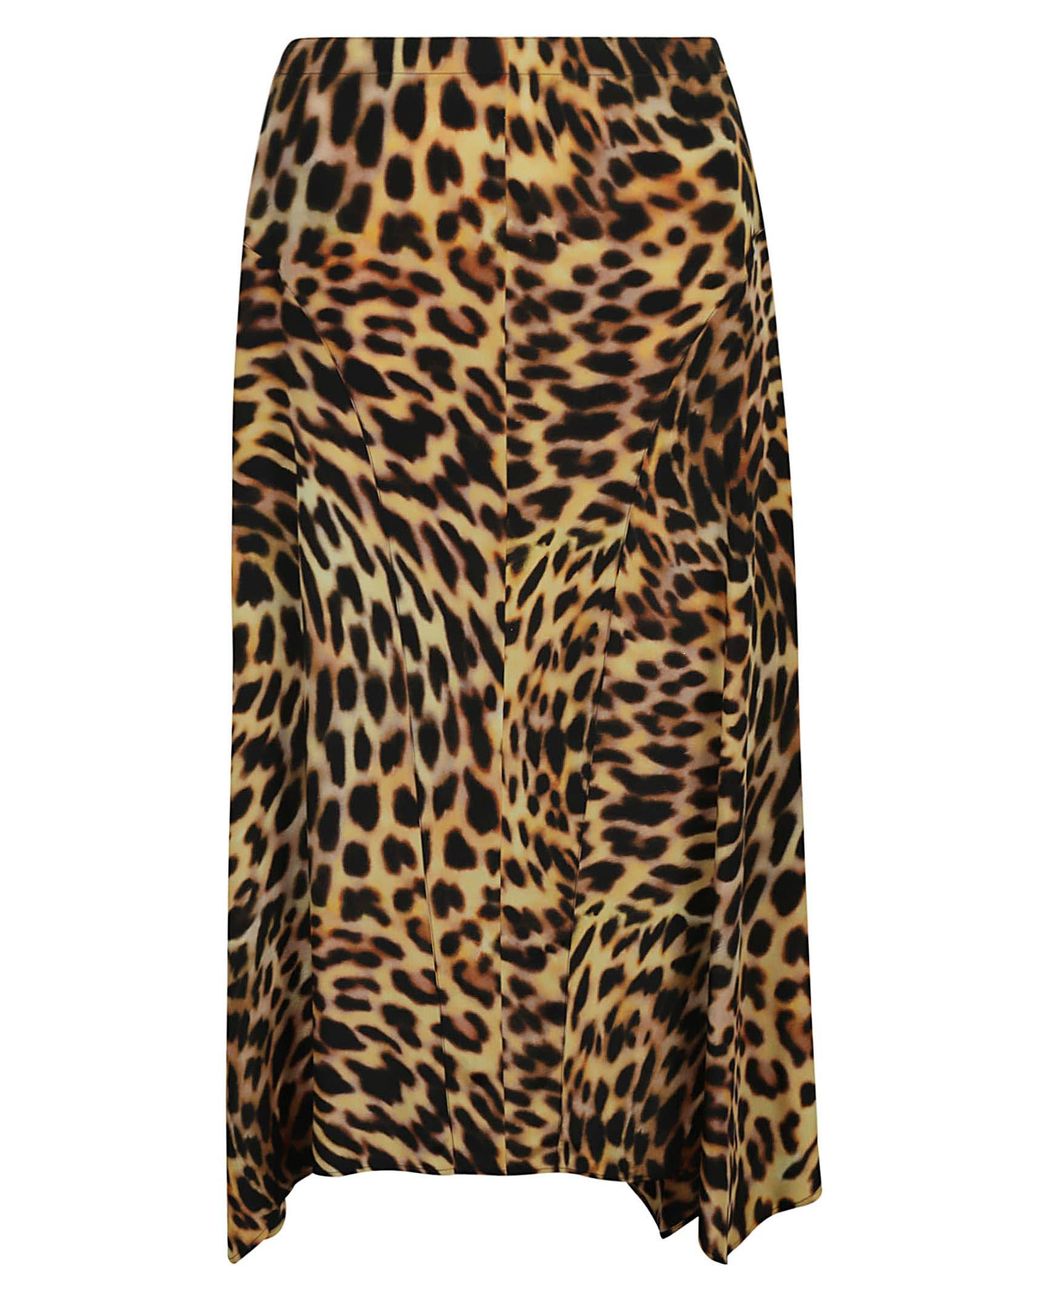 Stella McCartney Animal Print Skirt | Lyst